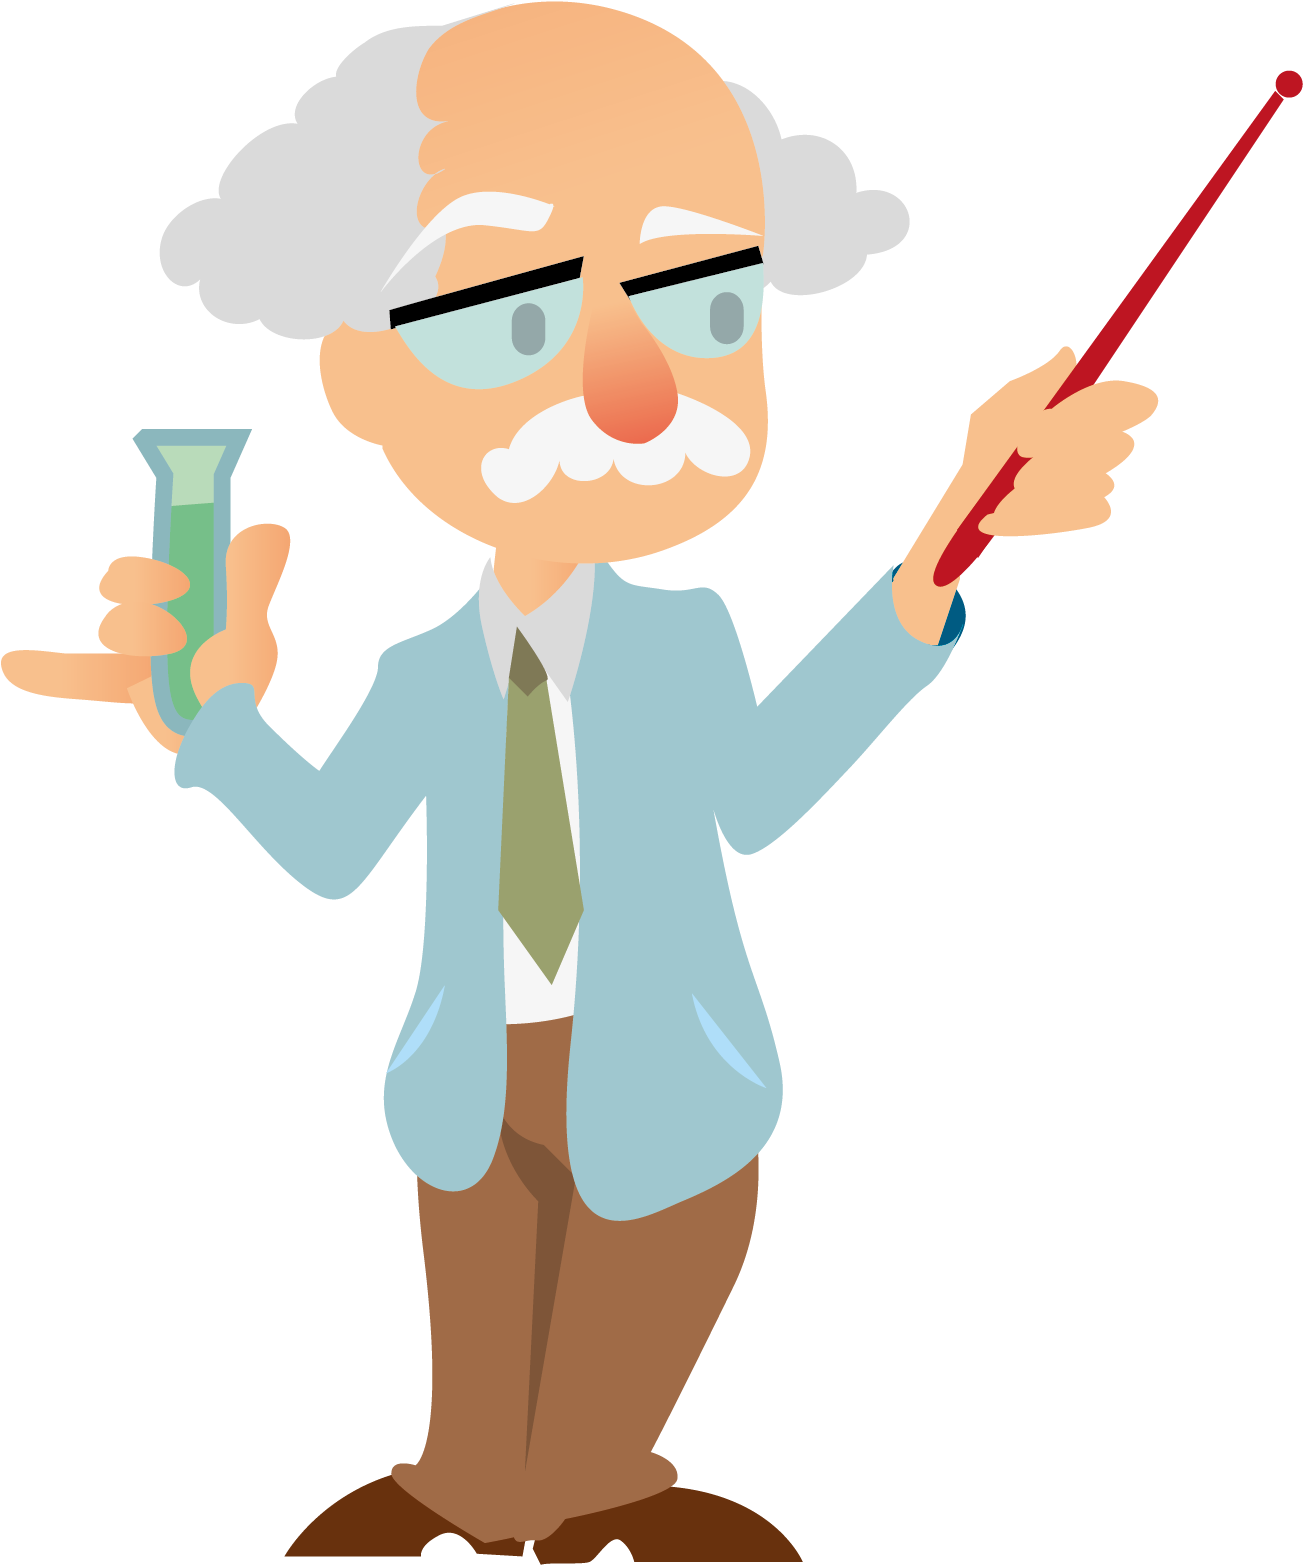 A Cartoon Of A Man Holding A Beaker And A Stick